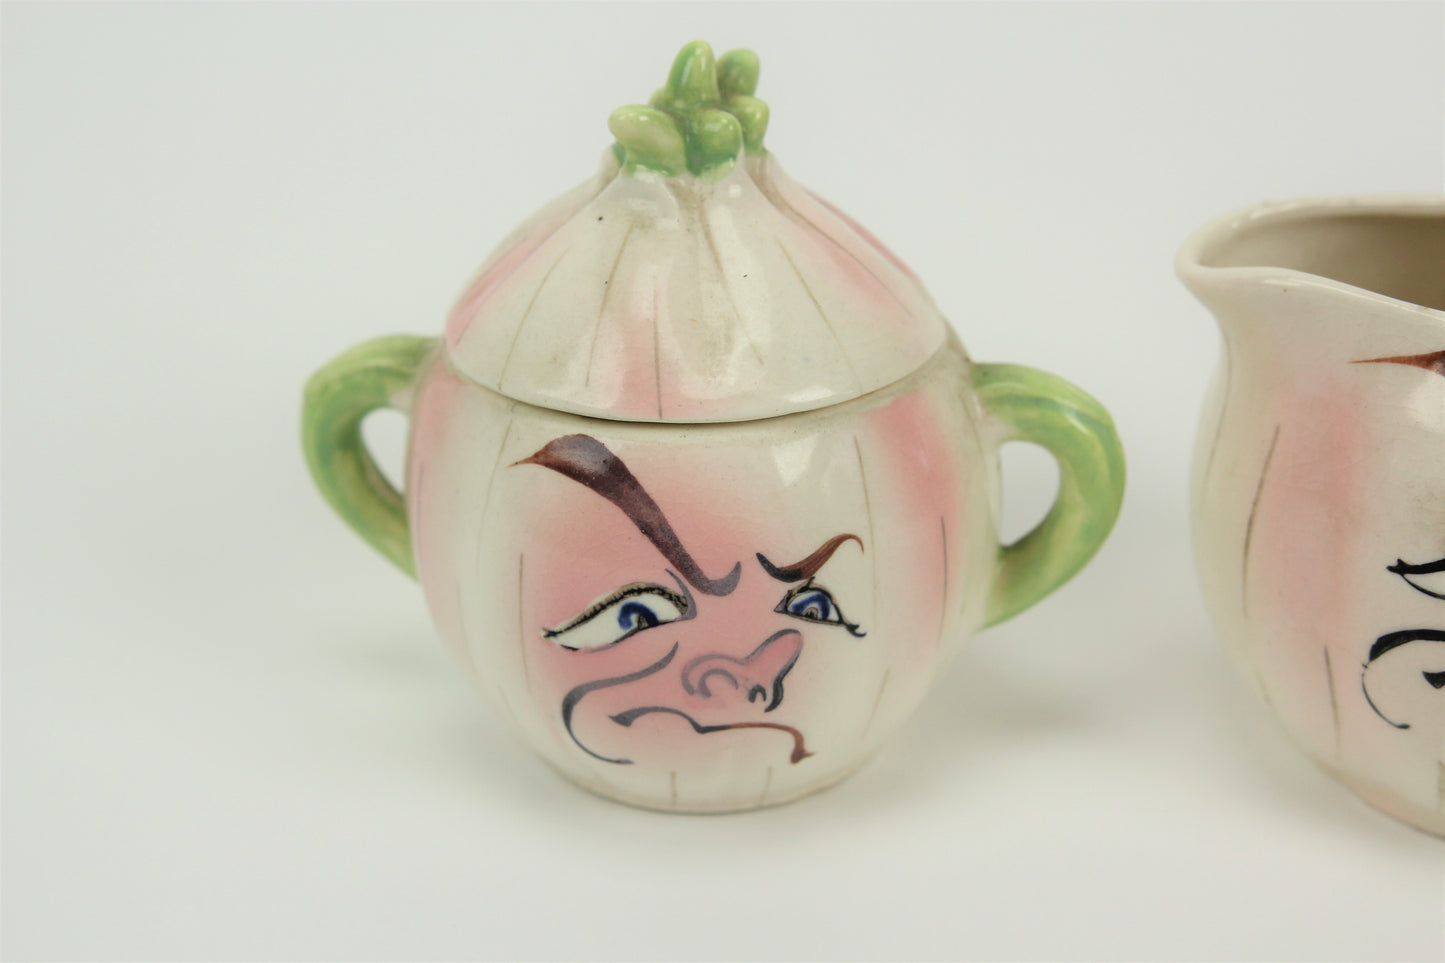 Anthropomorphic Onion Vegetable Face Man Sugar Bowl and Creamer